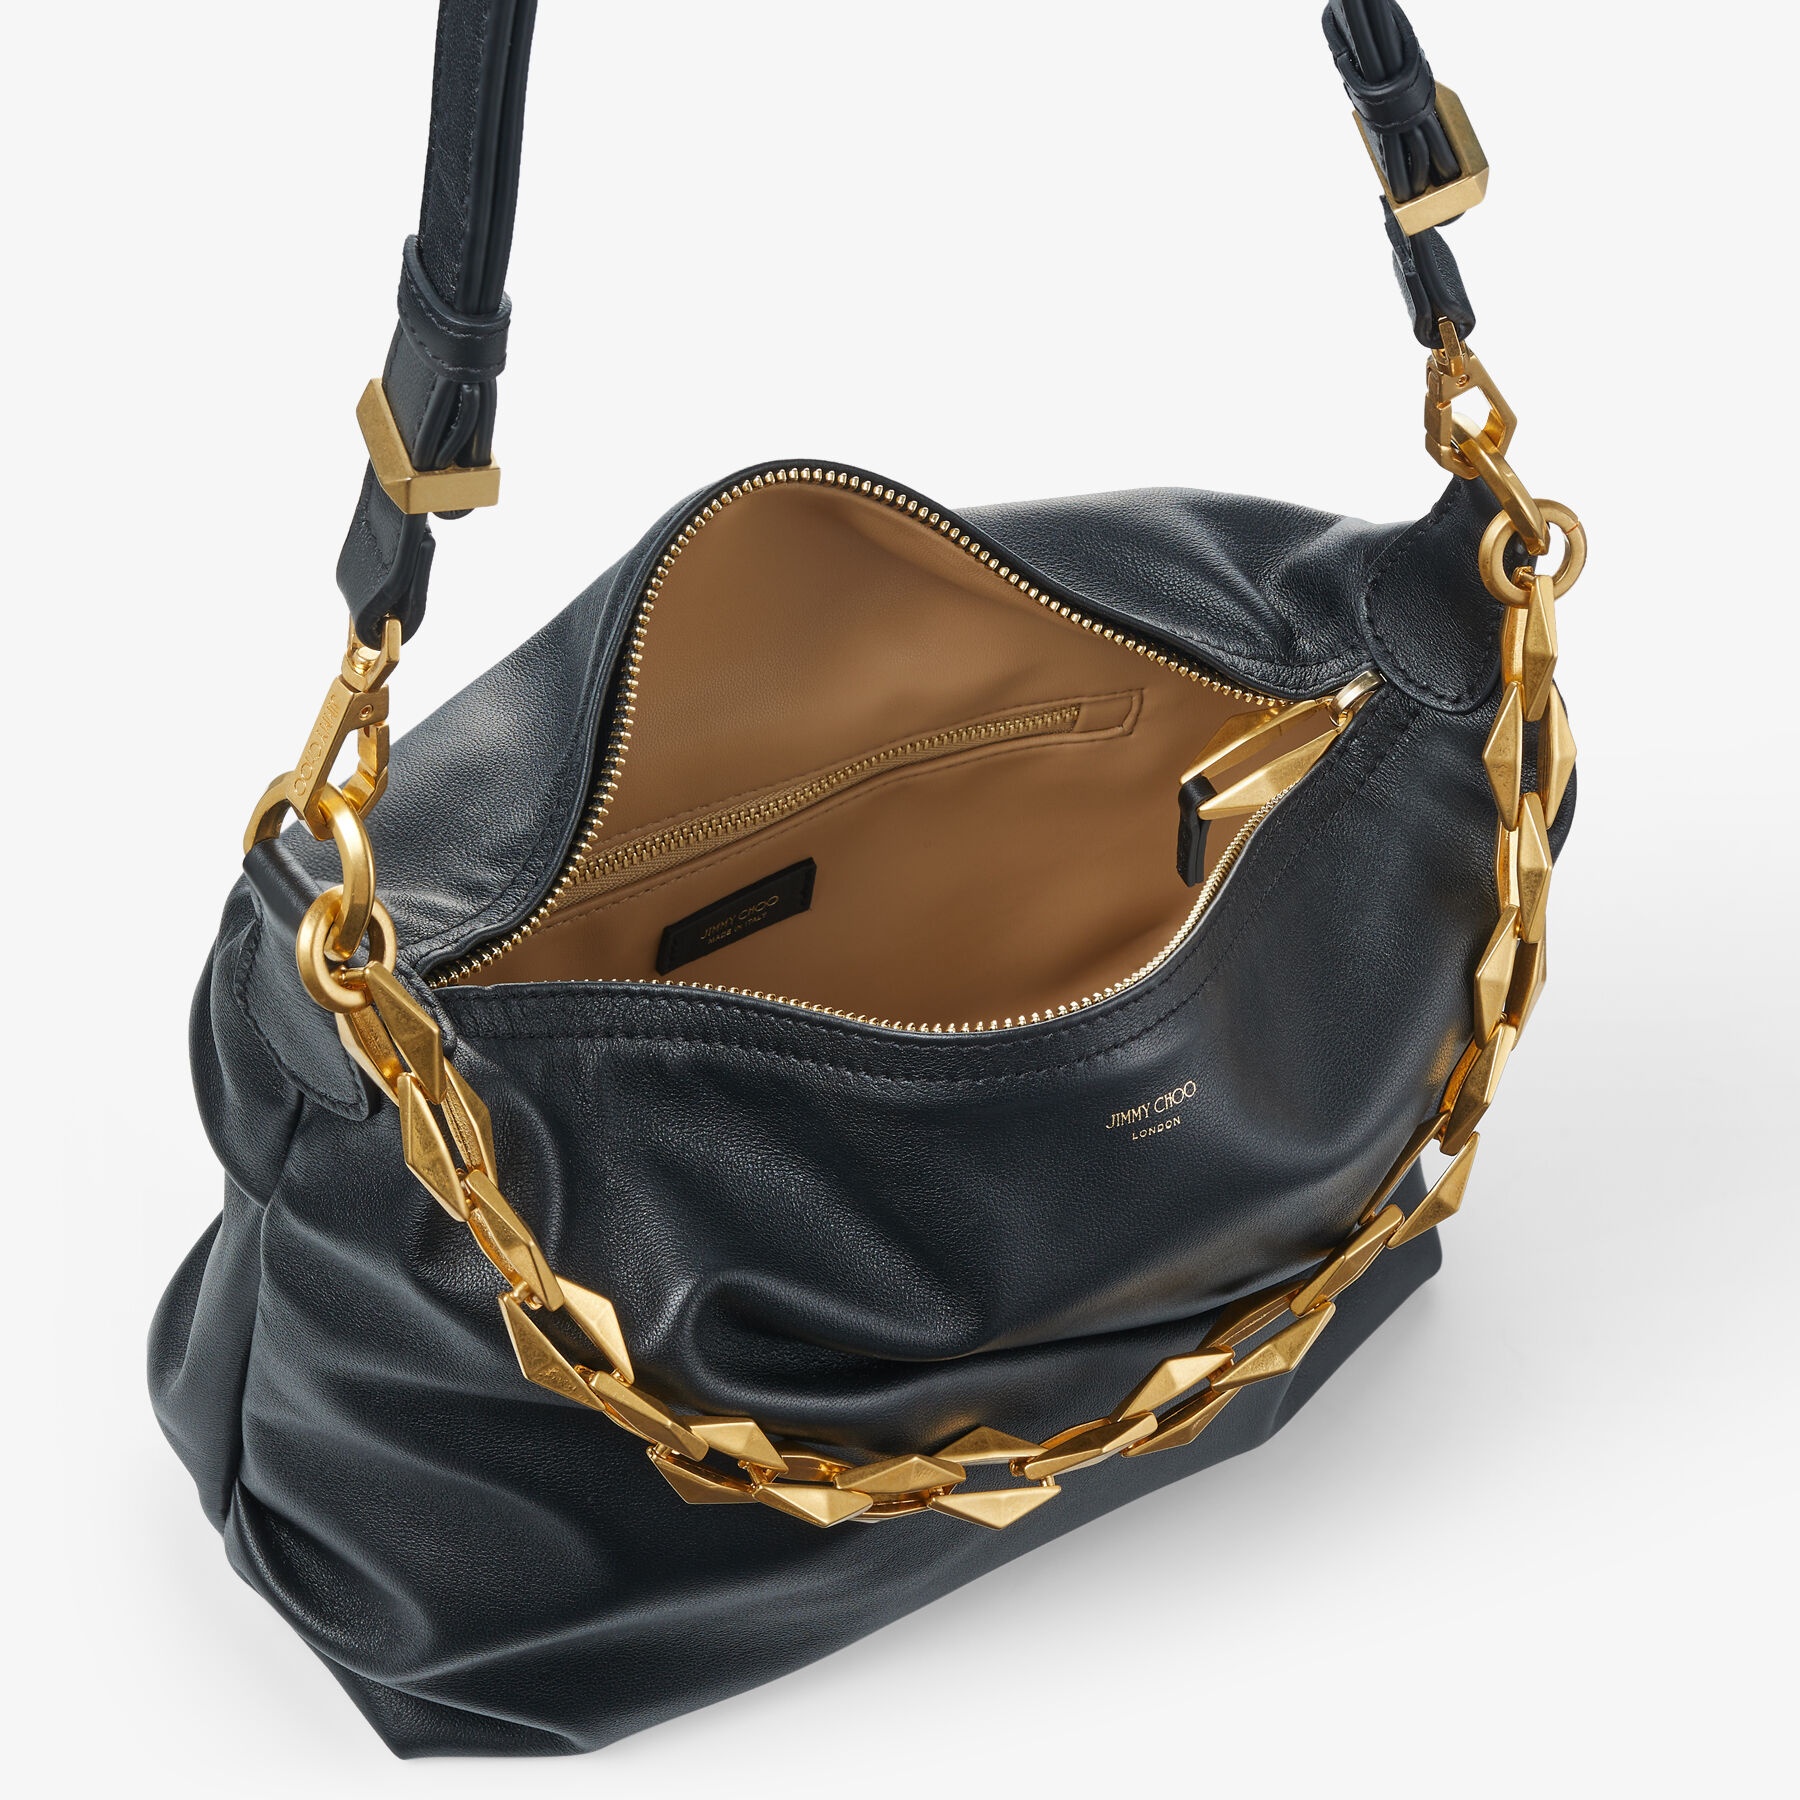 Diamond Soft Hobo S
Black Soft Calf Leather Hobo Bag with Chain Strap - 7